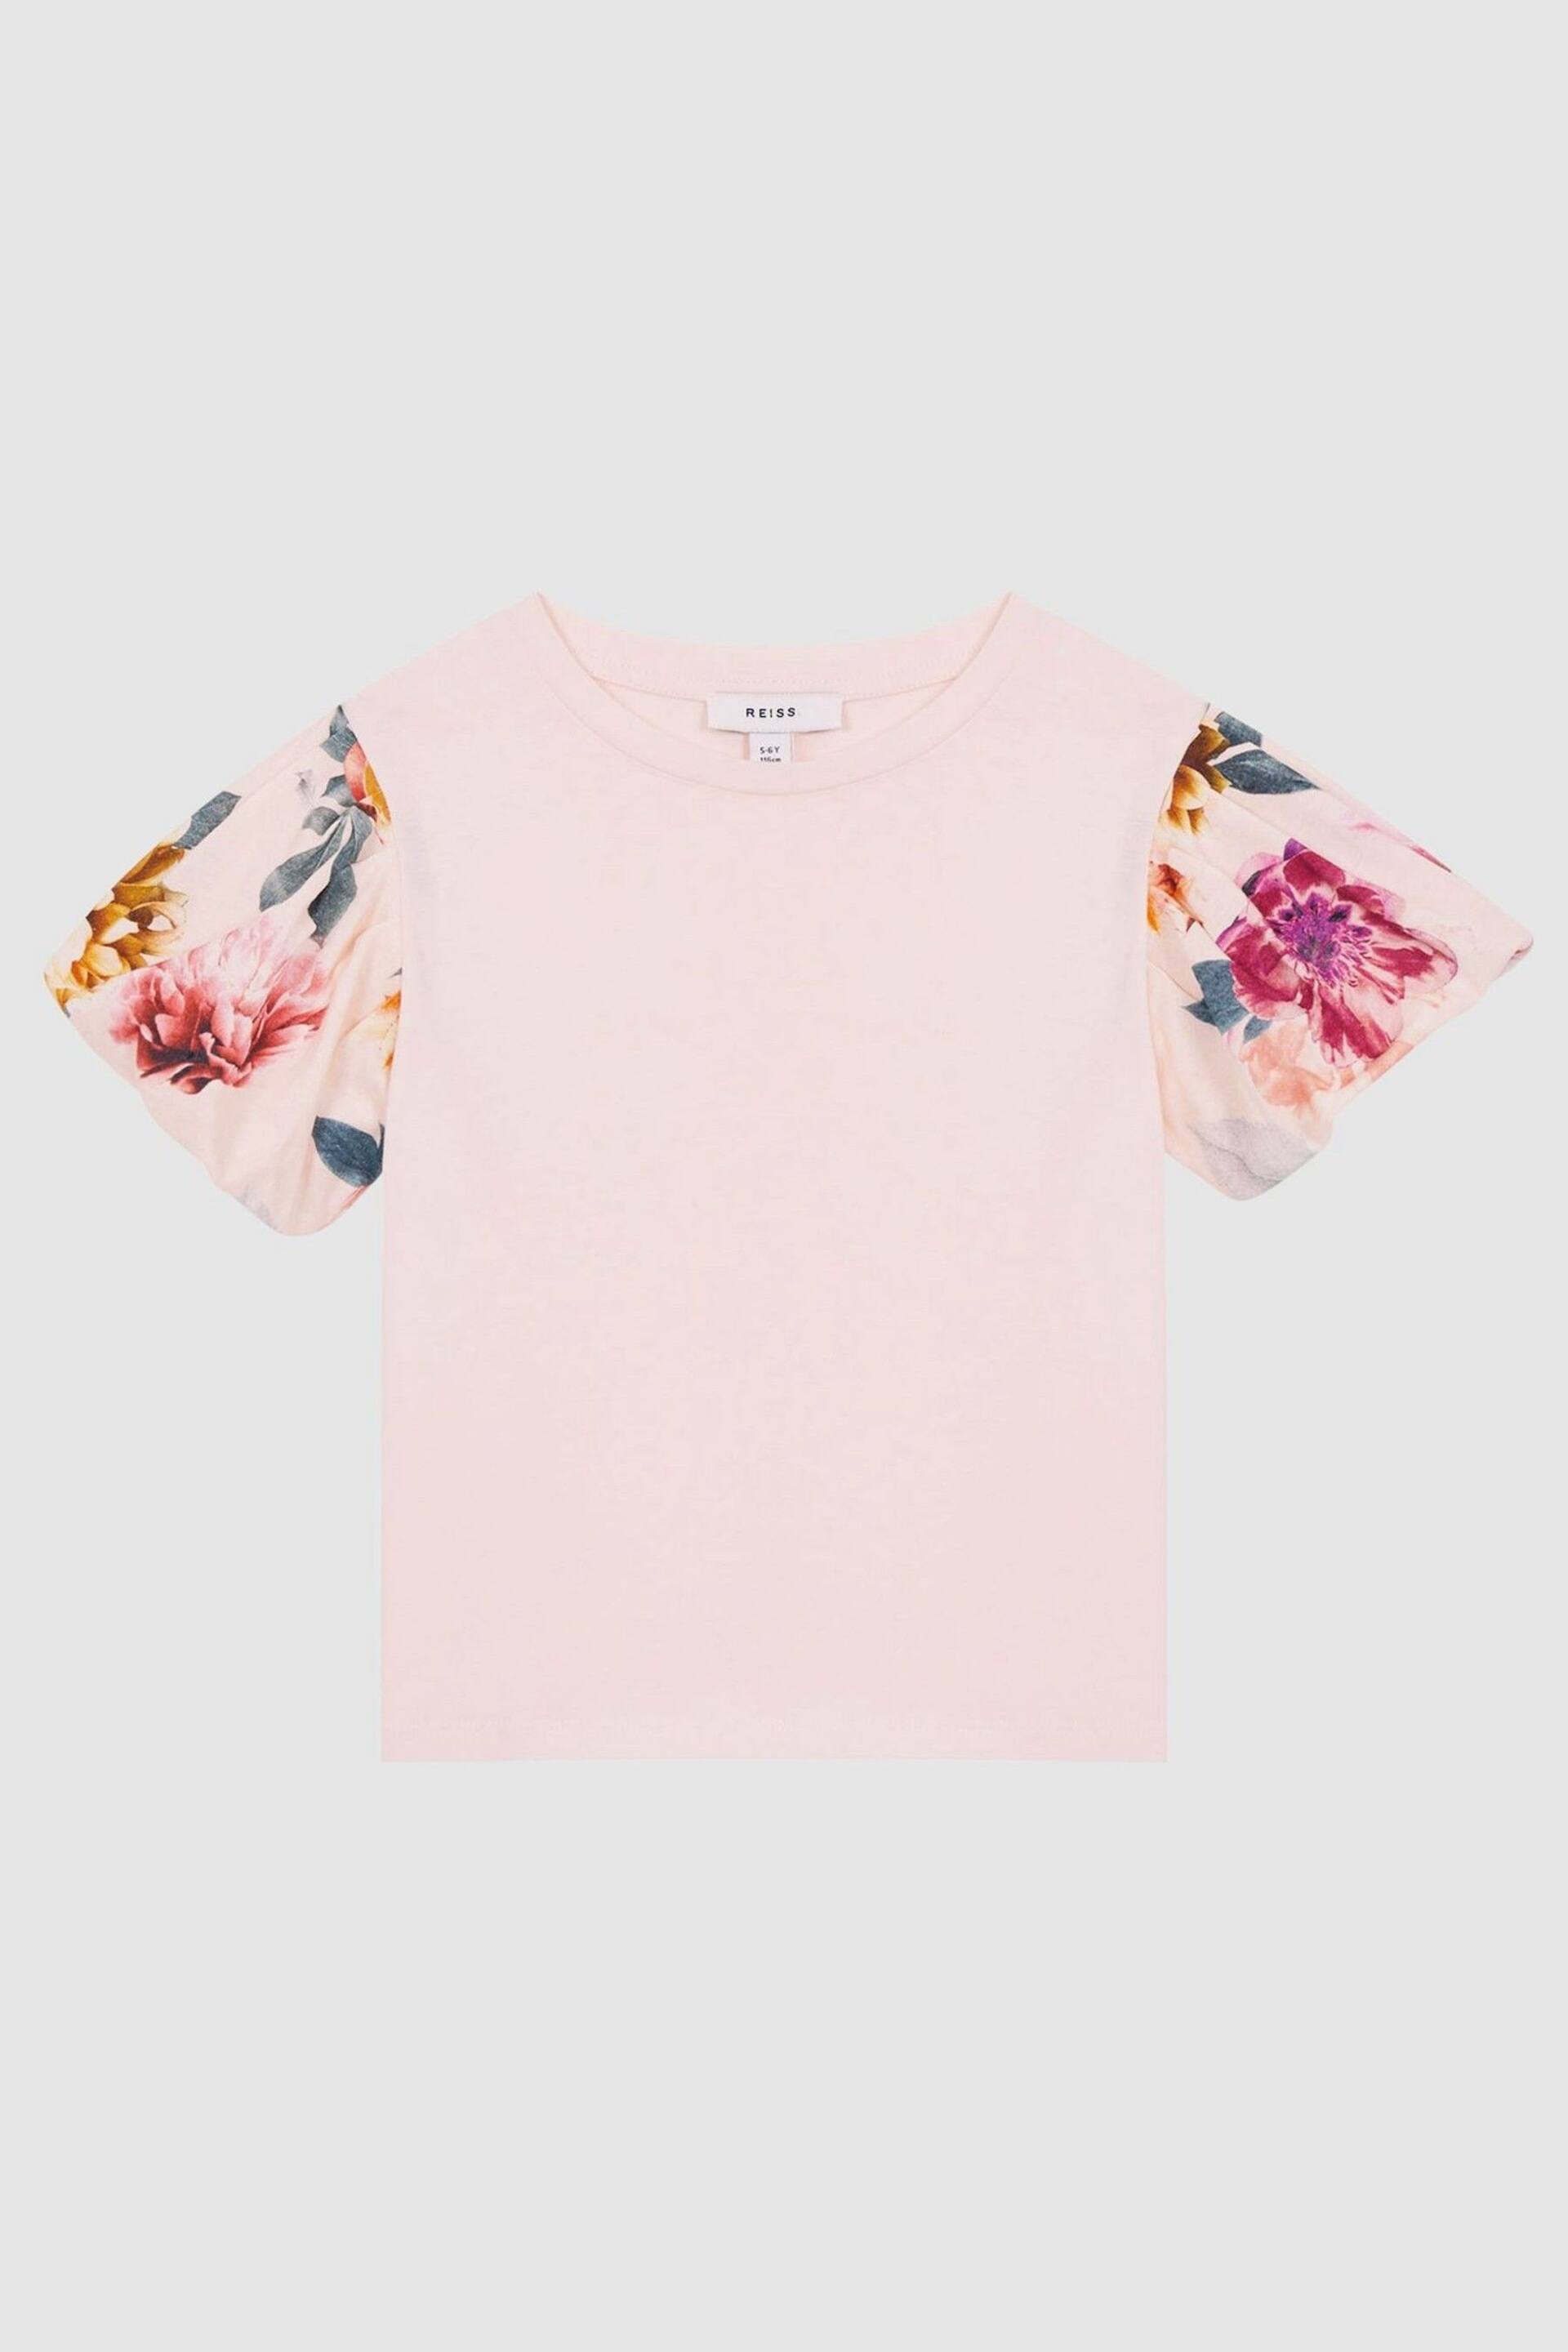 Reiss Ivory Amira Senior Floral Print Puff Sleeve T-Shirt - Image 2 of 6